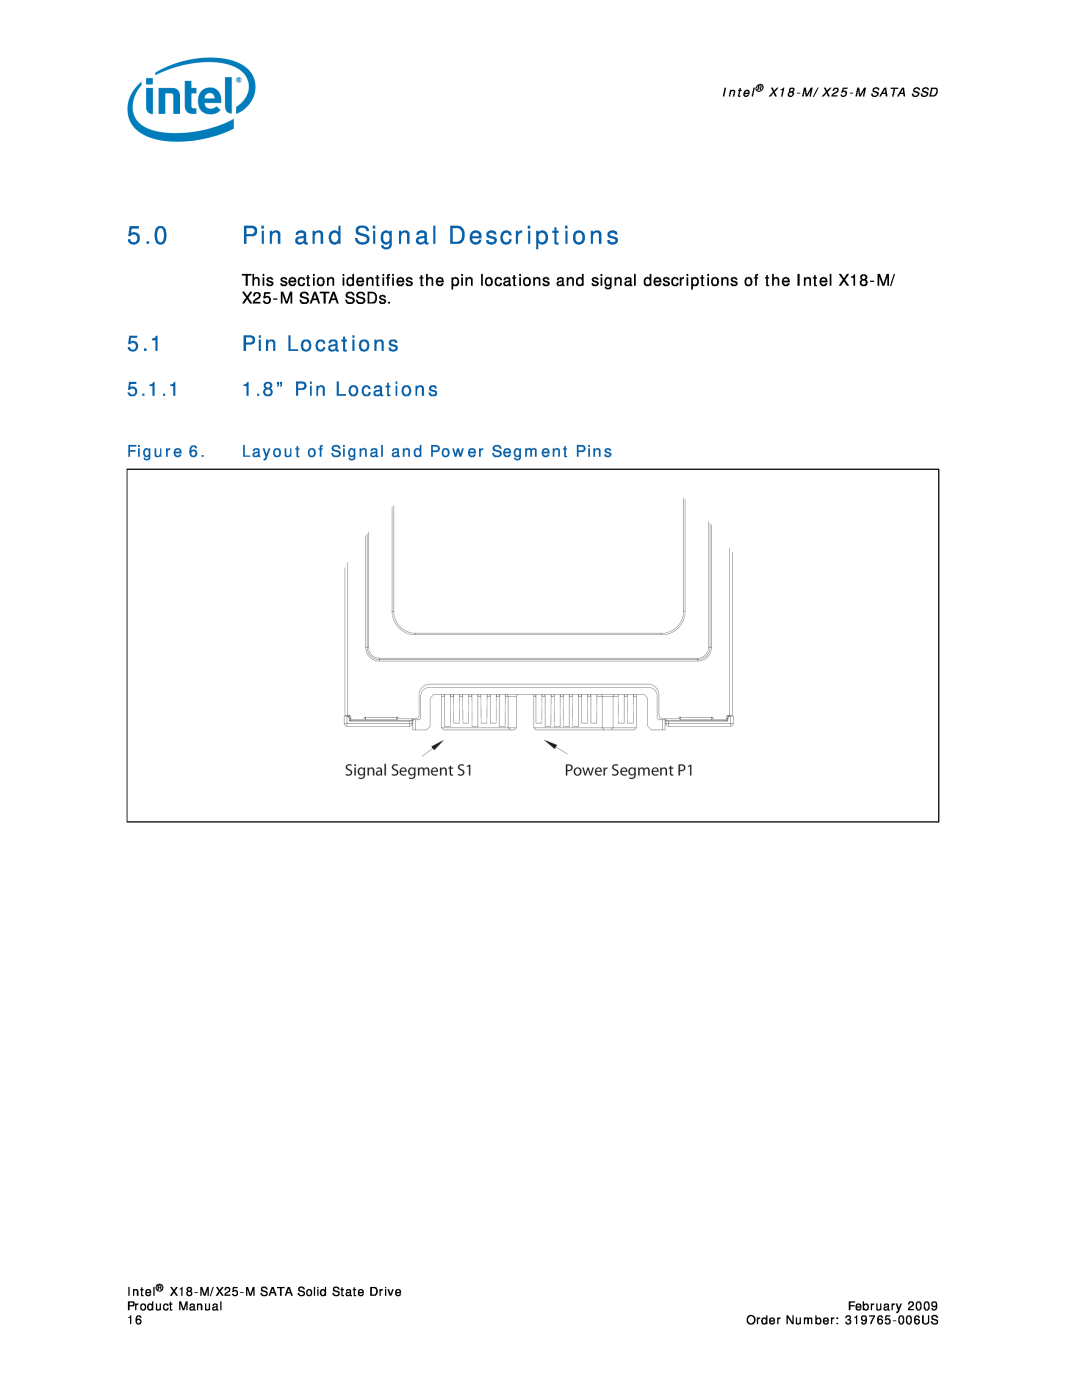 Intel X18-M 5.0Pin and Signal Descriptions, 5.1Pin Locations, 5.1.11.8” Pin Locations, Signal Segment S1, Power Segment P1 